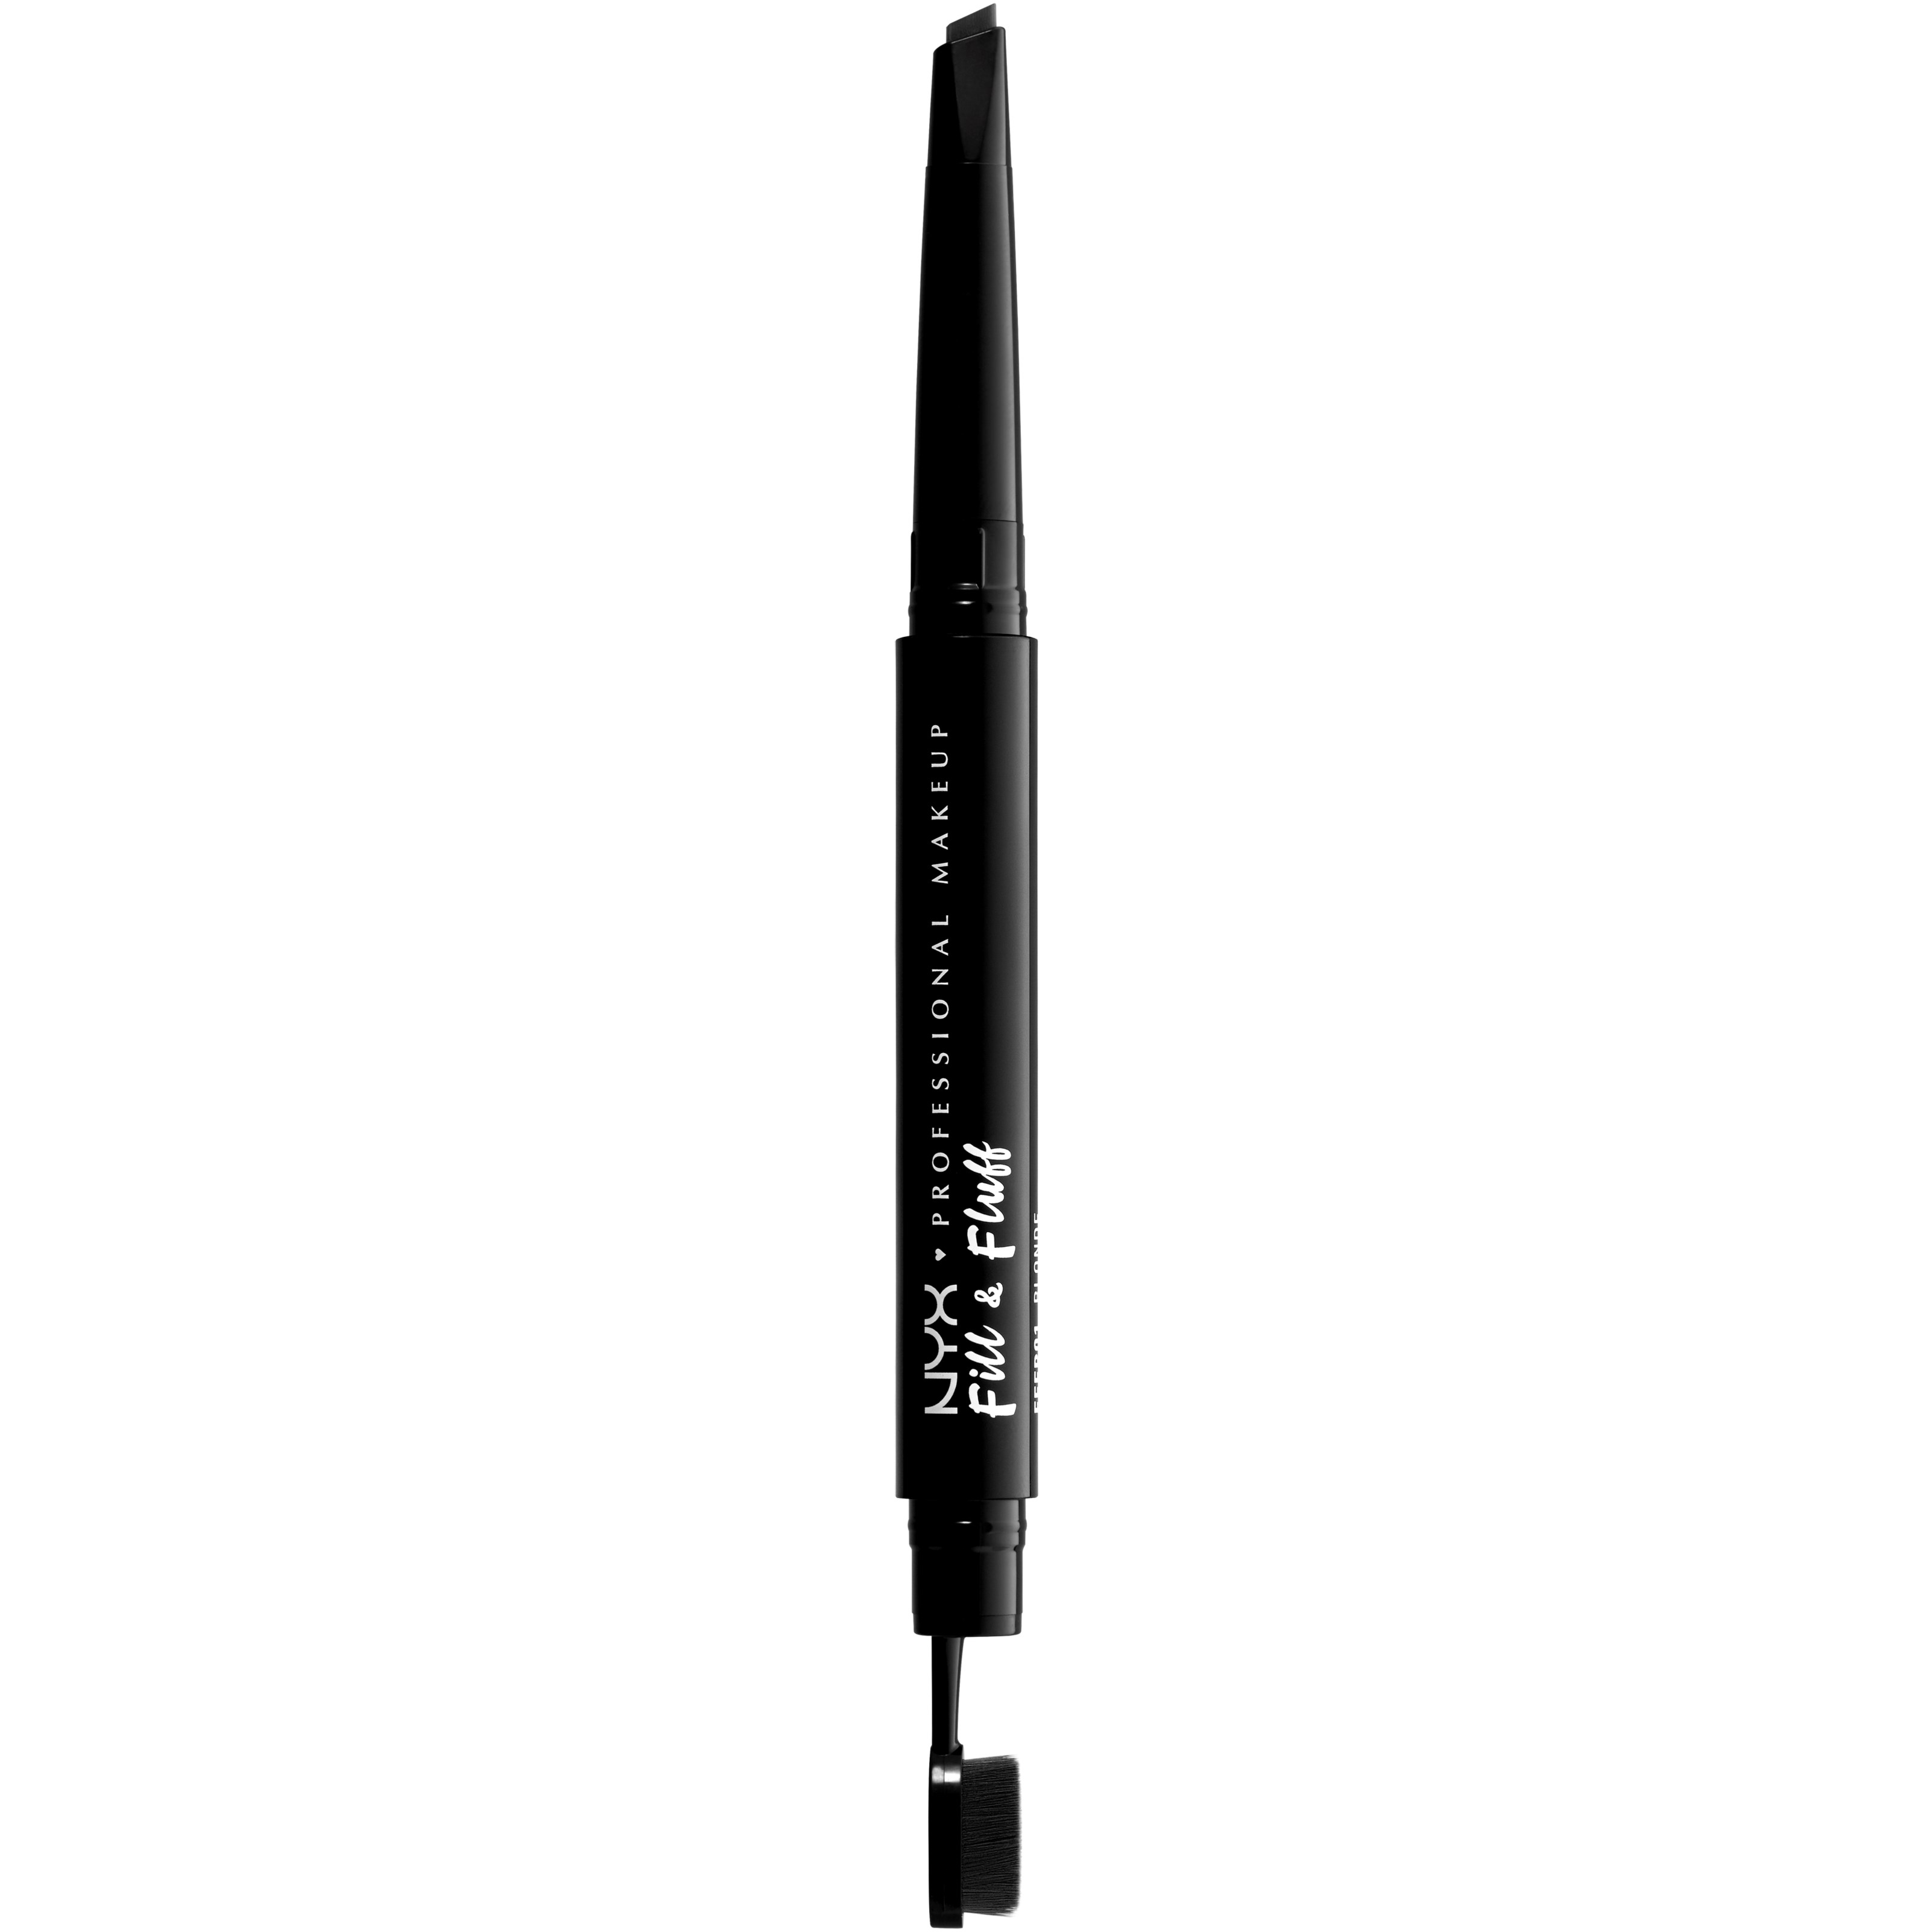 NYX PROF. MAKEUP Fill & Fluff Eyebrow Pomade Pencil - Black